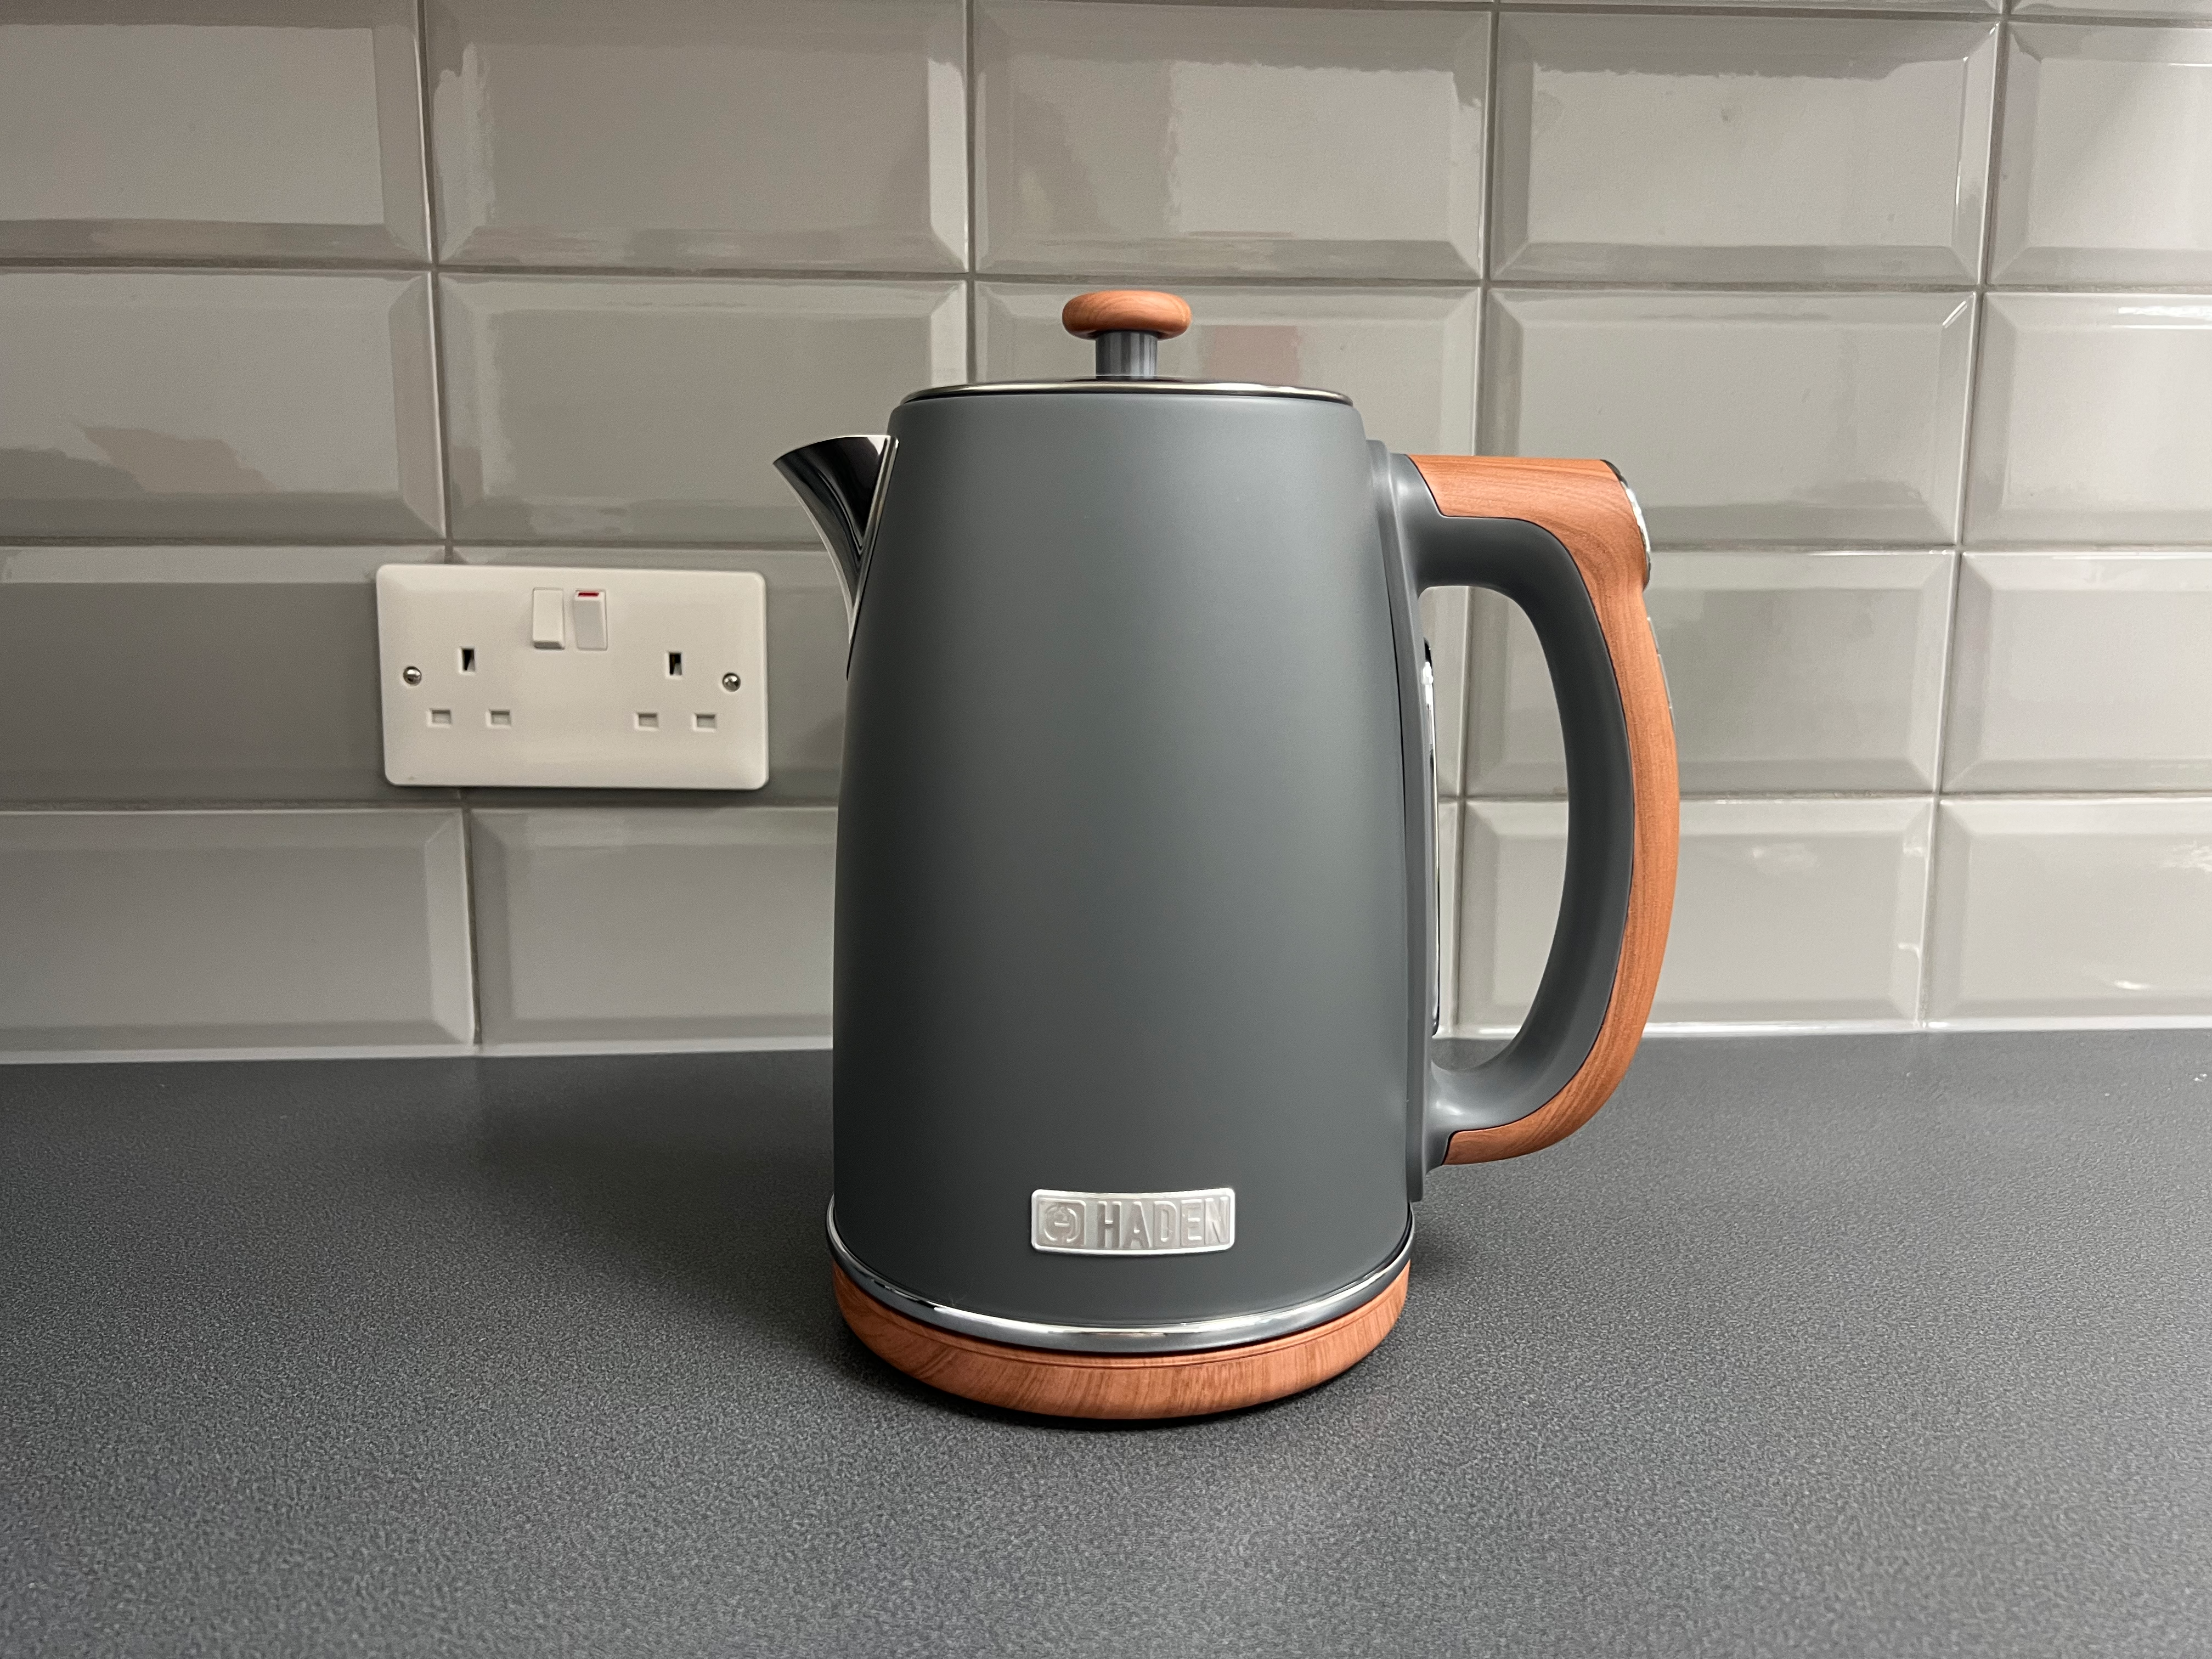 Haden Dorchester grey 1.7l digital variable temperature kettle